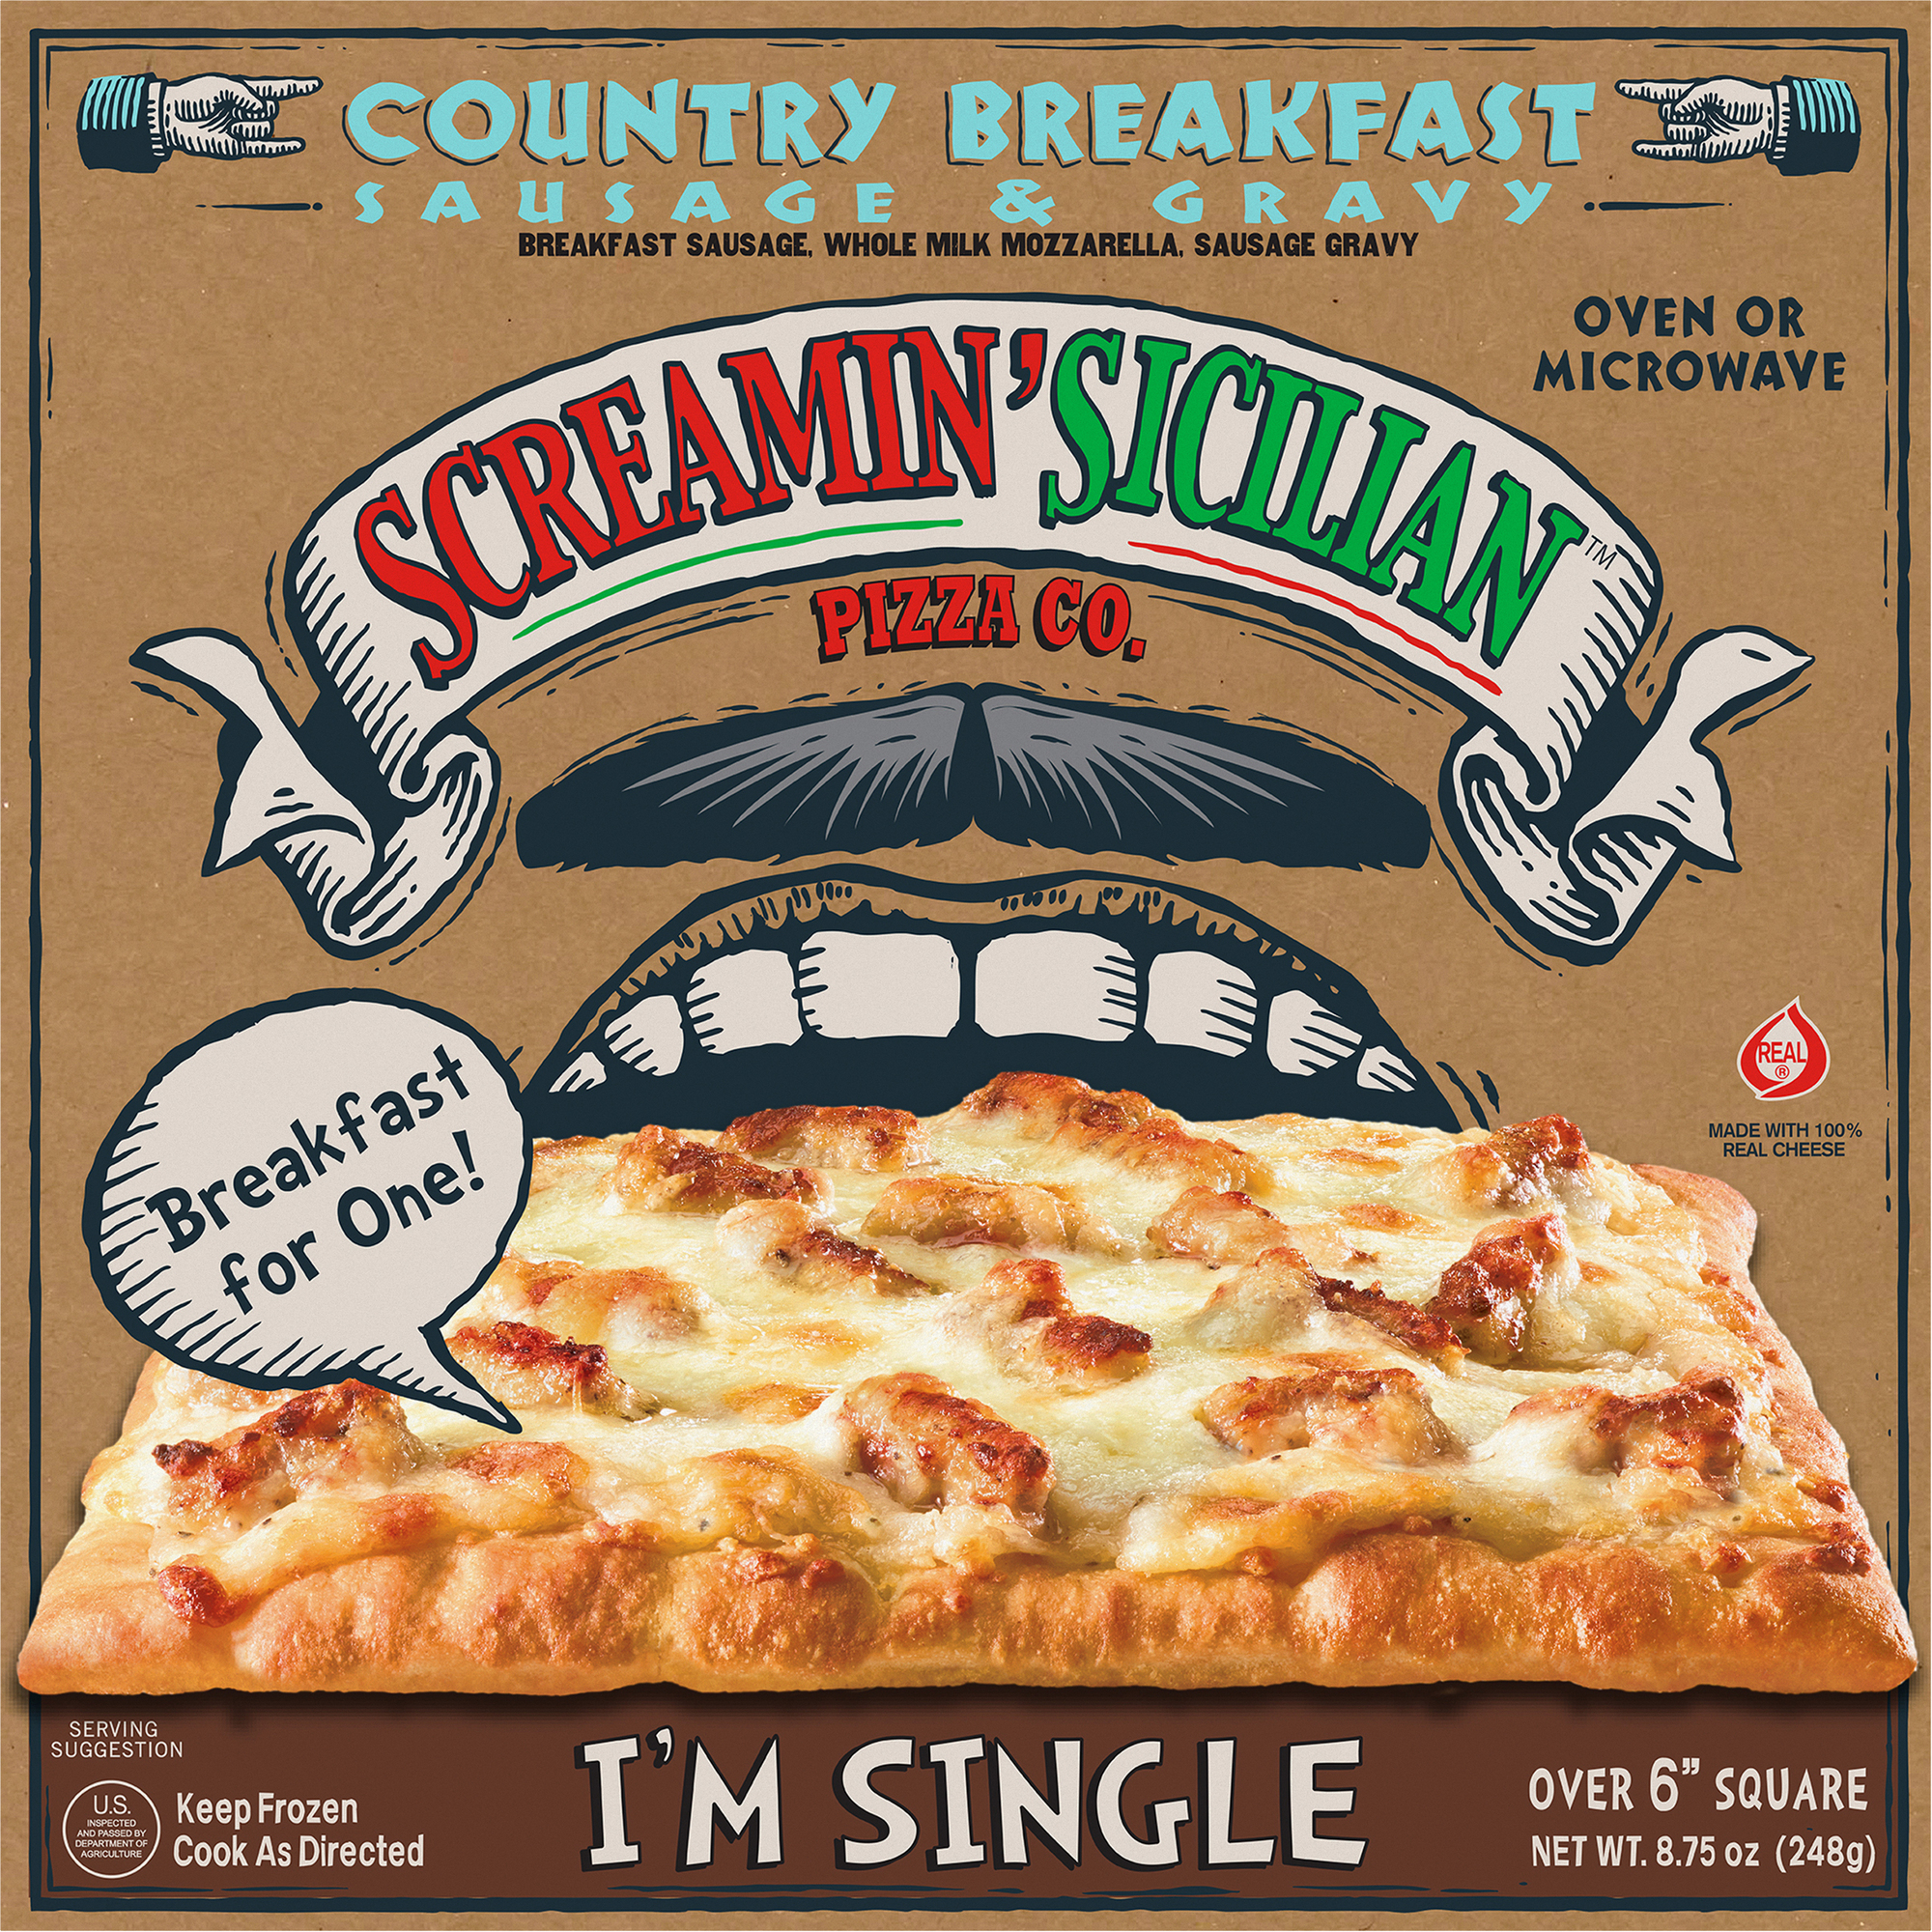 Screamin’ Sicilian Single Serve Breakfast Pizzas Now Available at Walmart